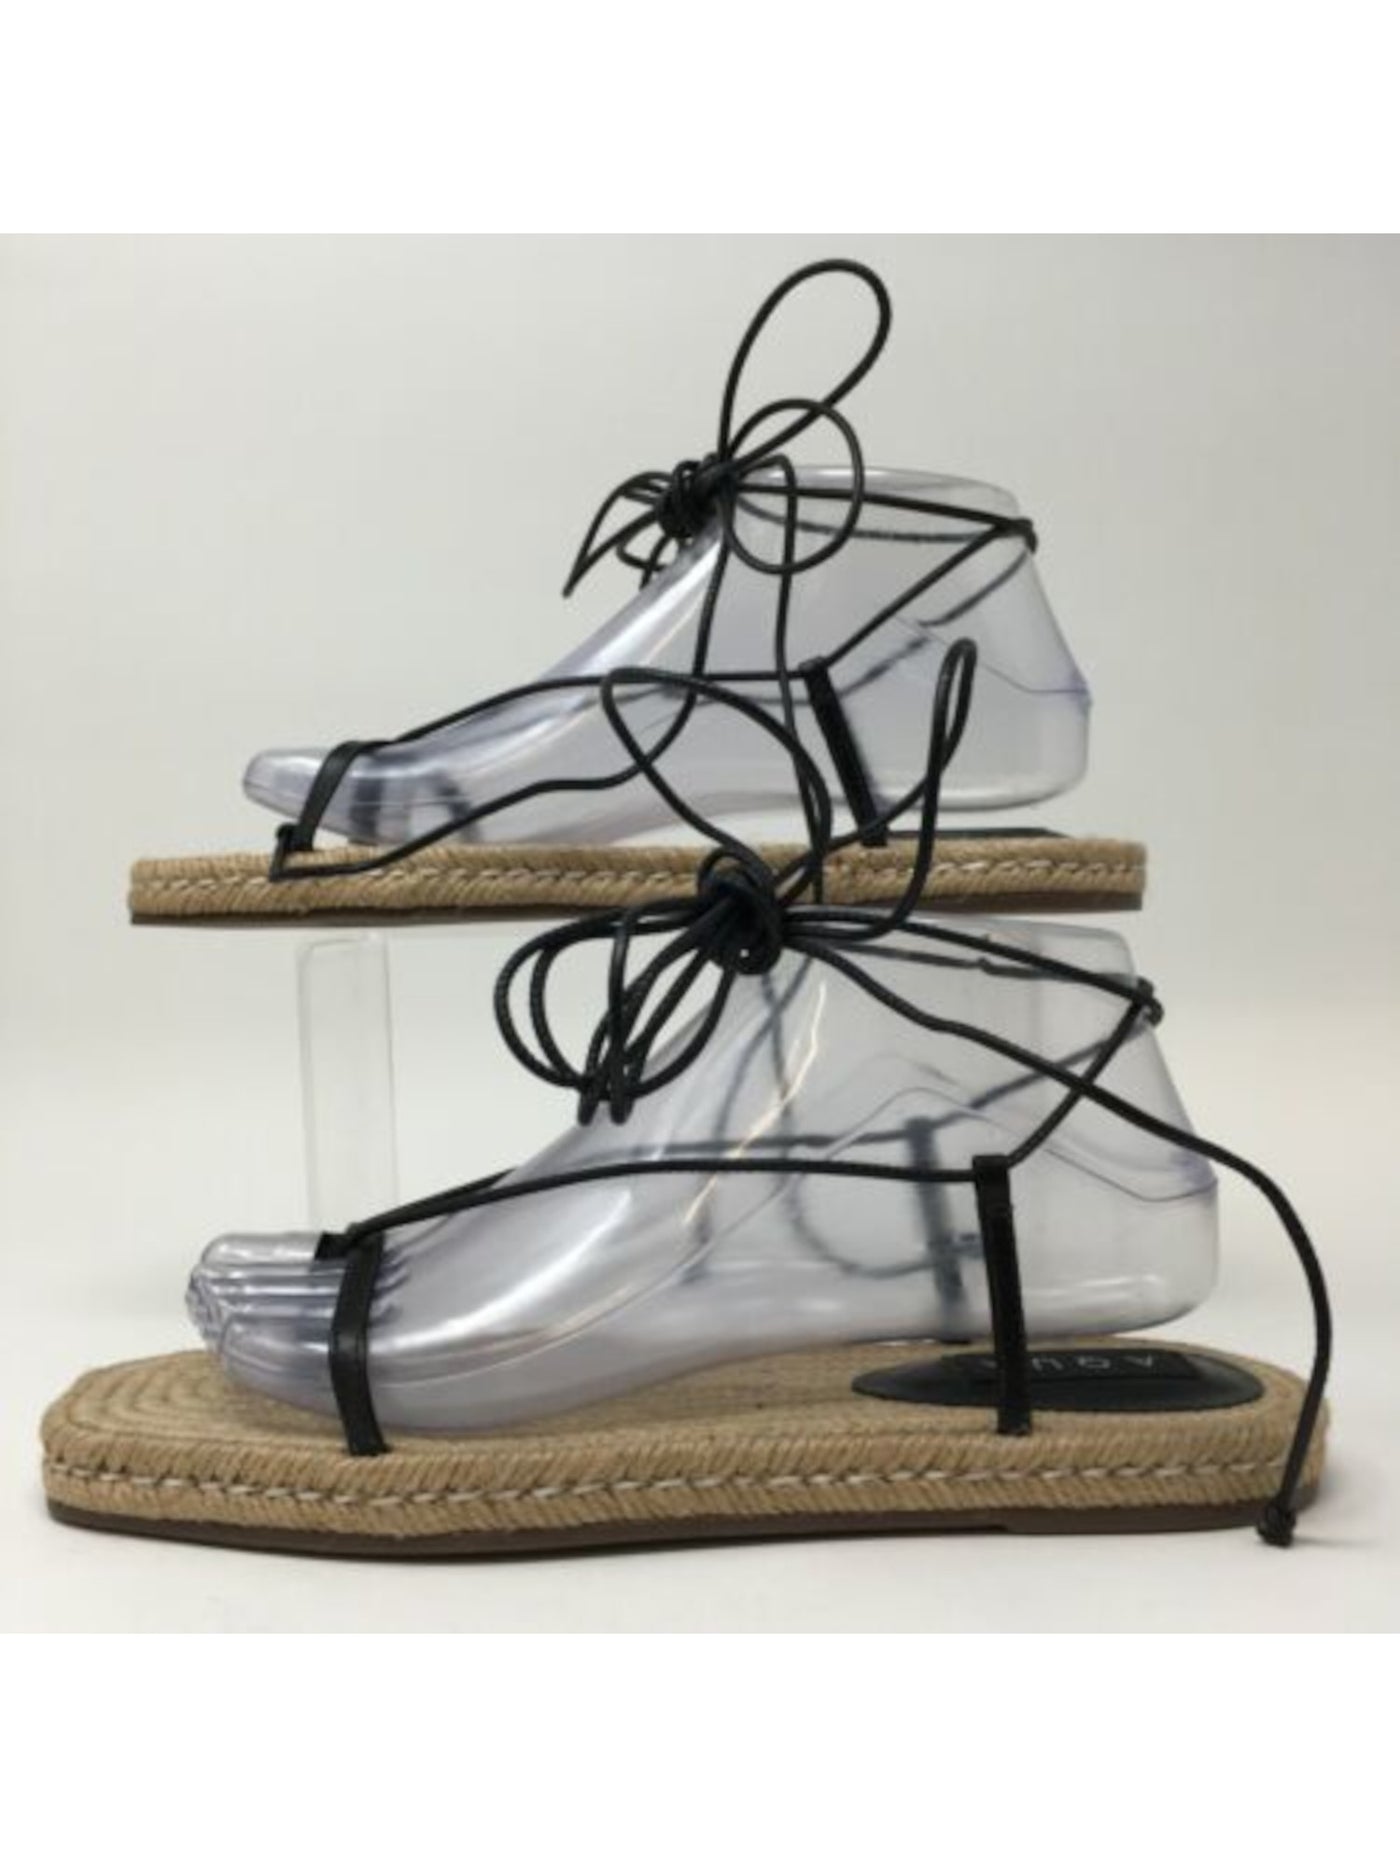 AQUA Womens Black Strappy Square Toe Platform Lace-Up Leather Espadrille Shoes 7 B